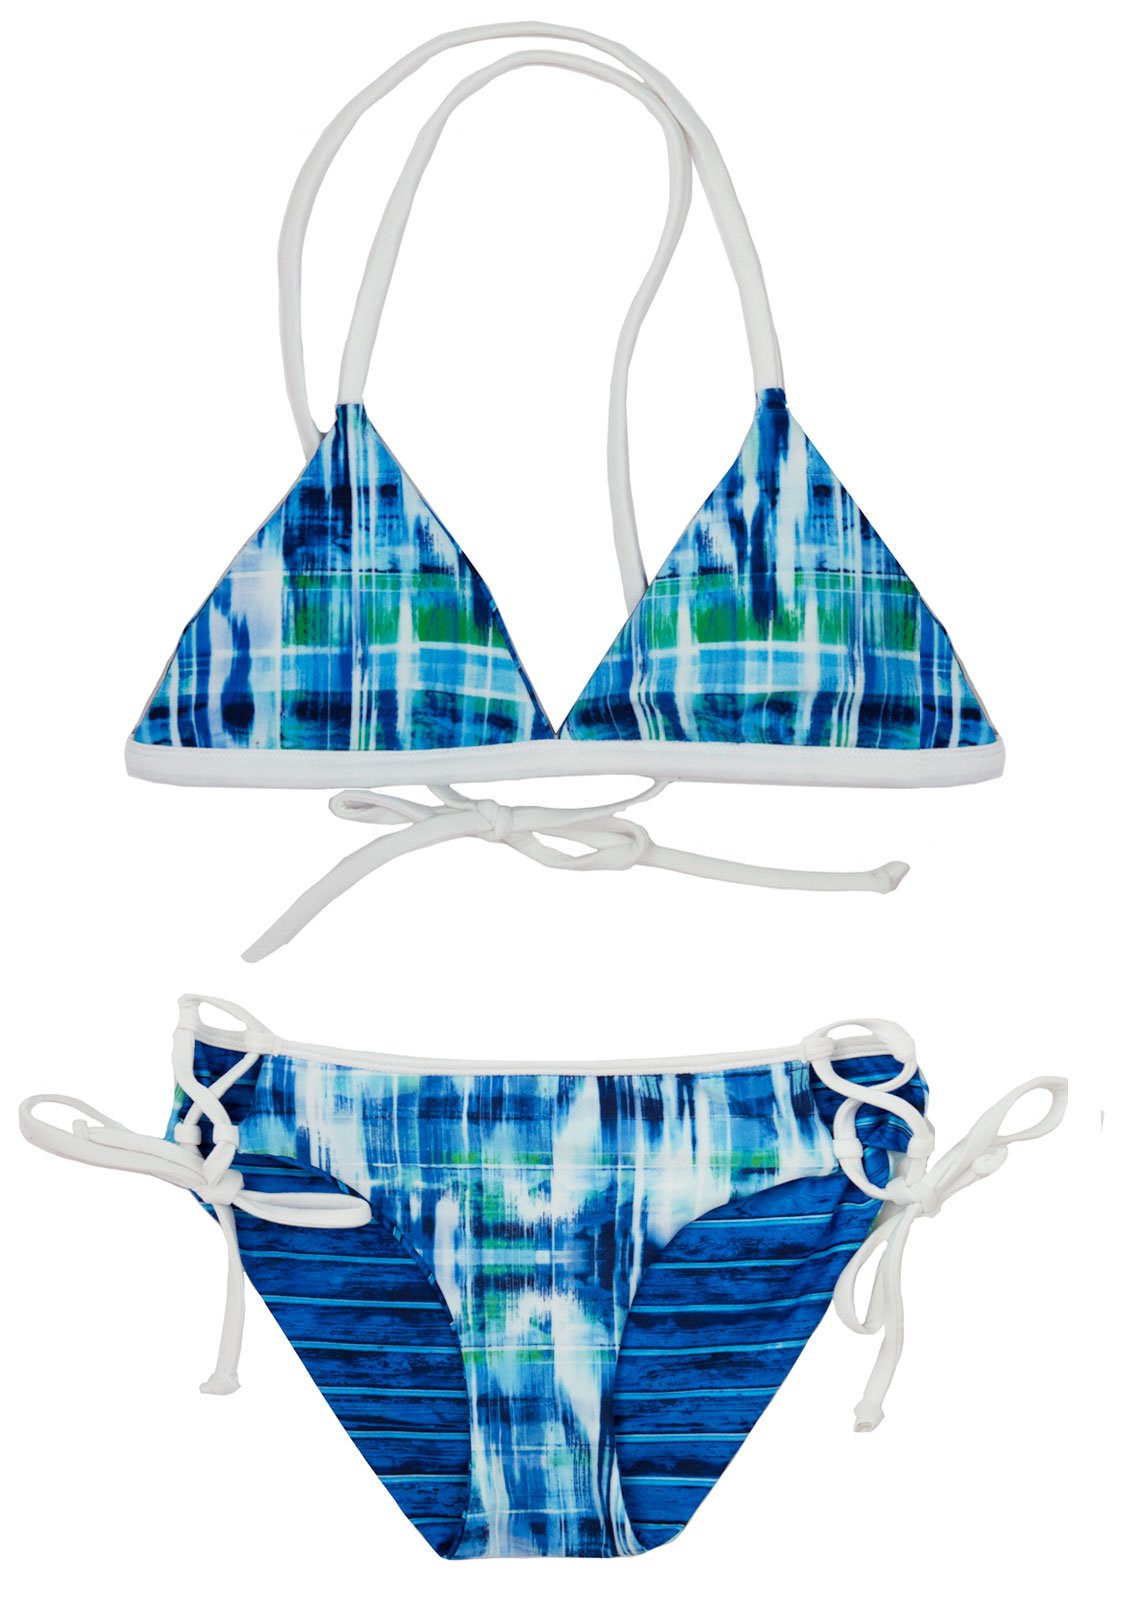 Aquazul Bikini - 2 Piece Reversible SET for Girls with TRIANGLE Top TWO PIECE Bikini Set Chance Loves Swim Girls 10 Blue/Green/White 